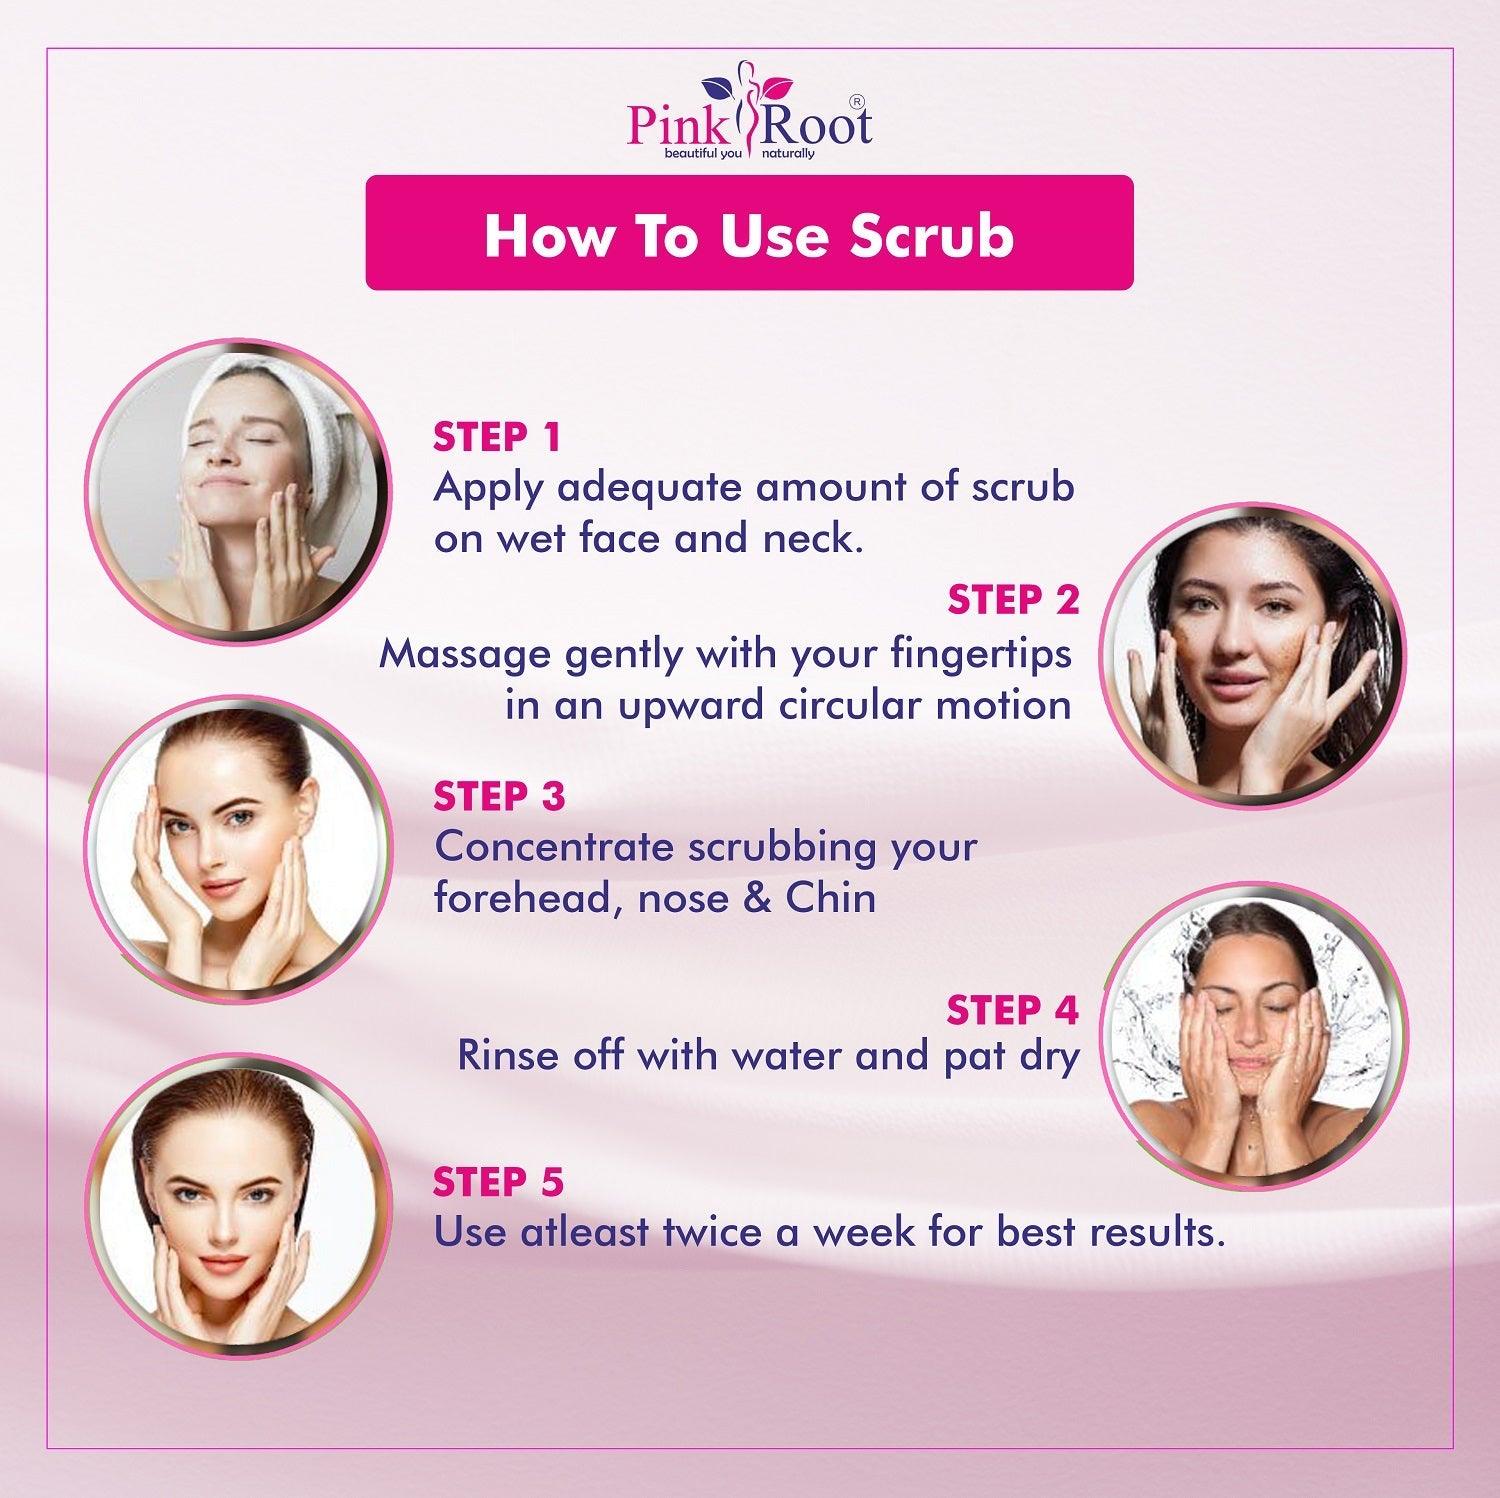 Lavender Scrub Face & Body Scrub 500ml - Pink Root